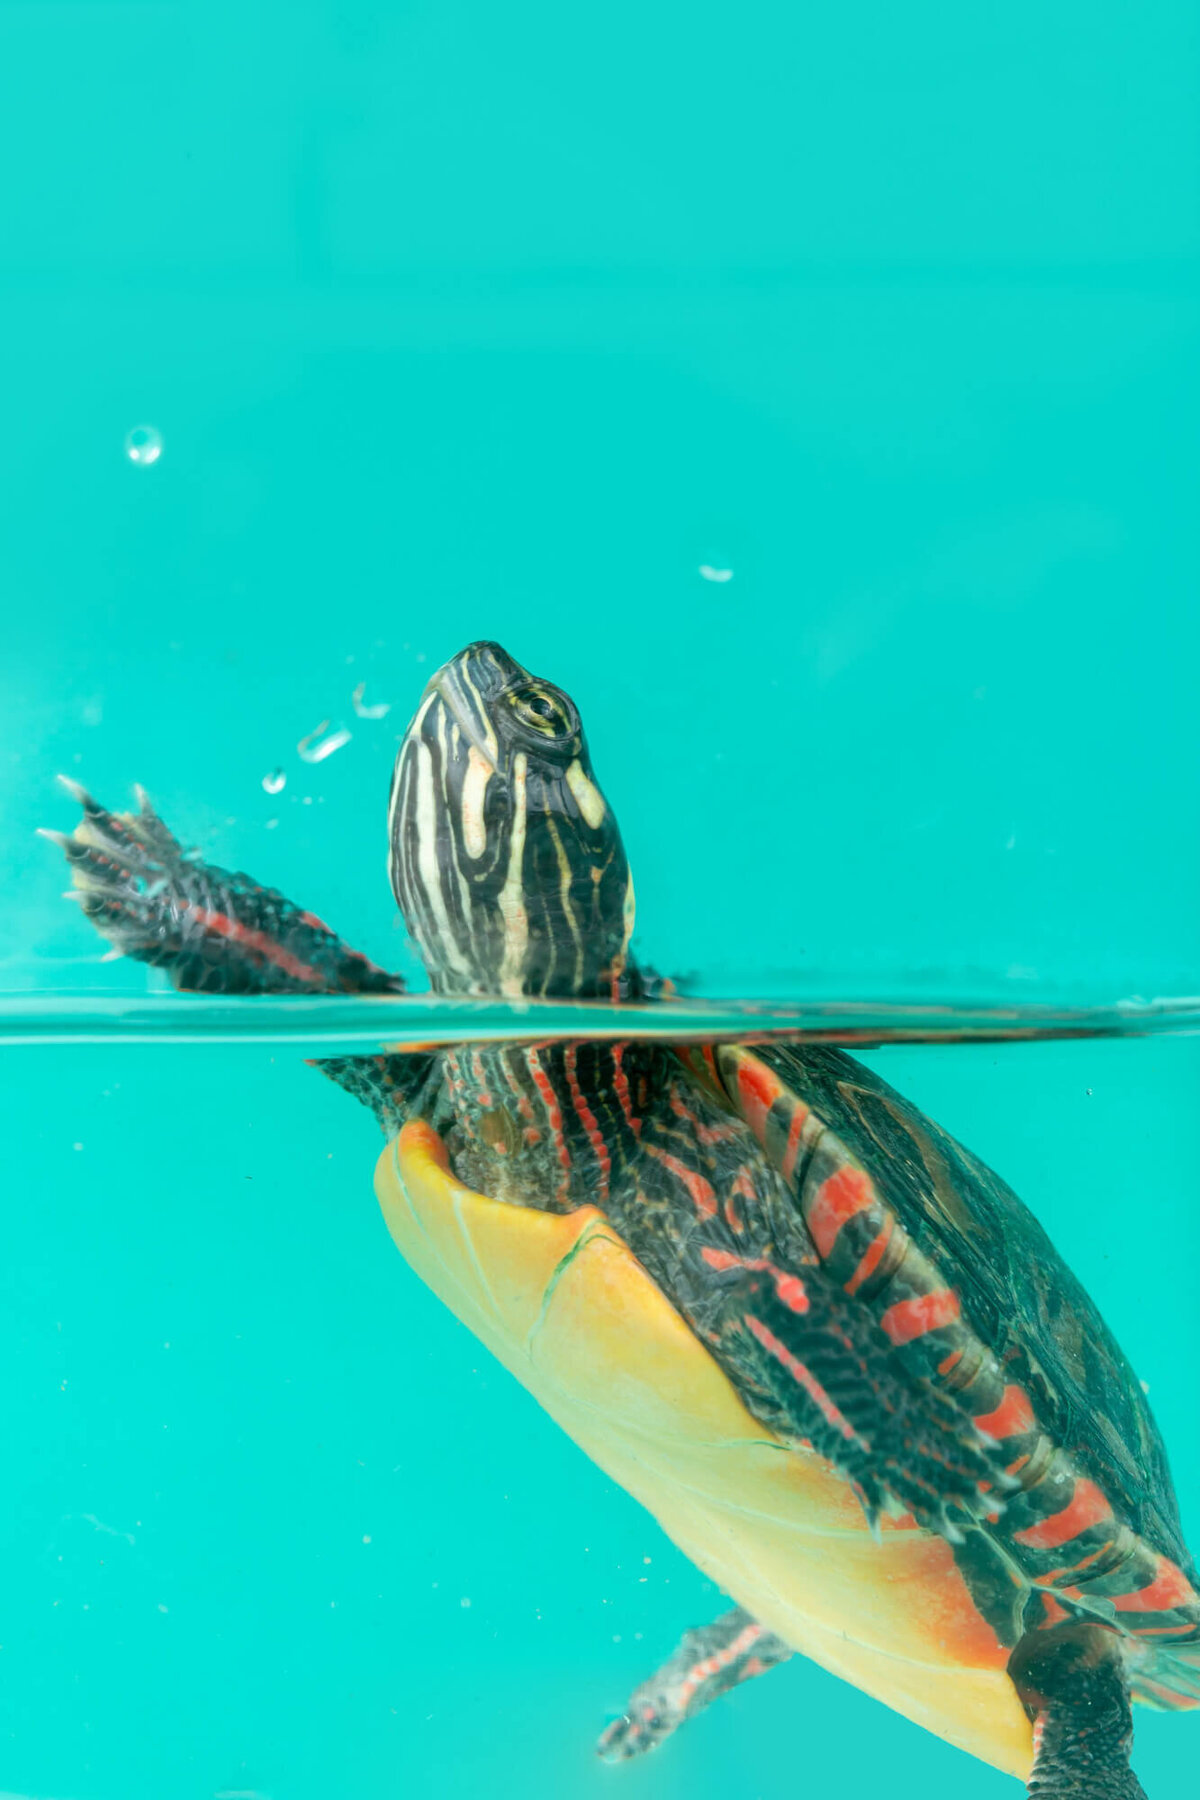 Aquatic turtle swimming in water on teal backdrop